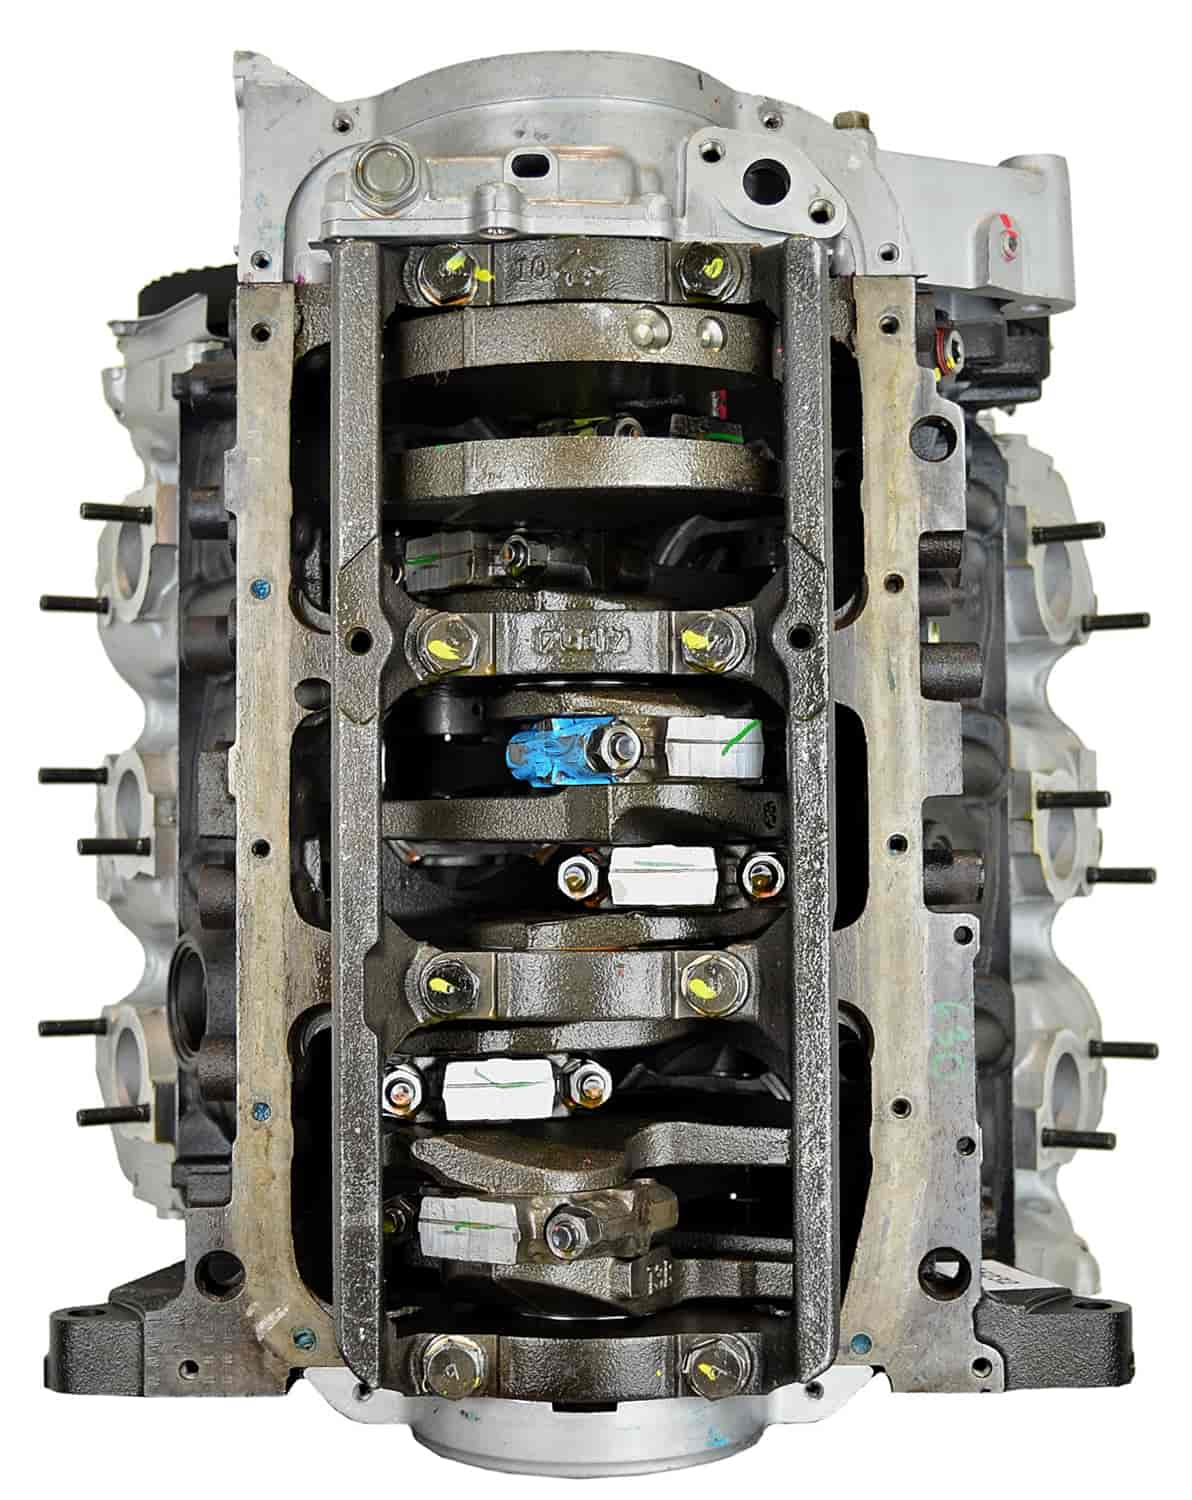 Remanufactured Crate Engine for 1999 Mitsubishi Montero Sport with 3.0L V6